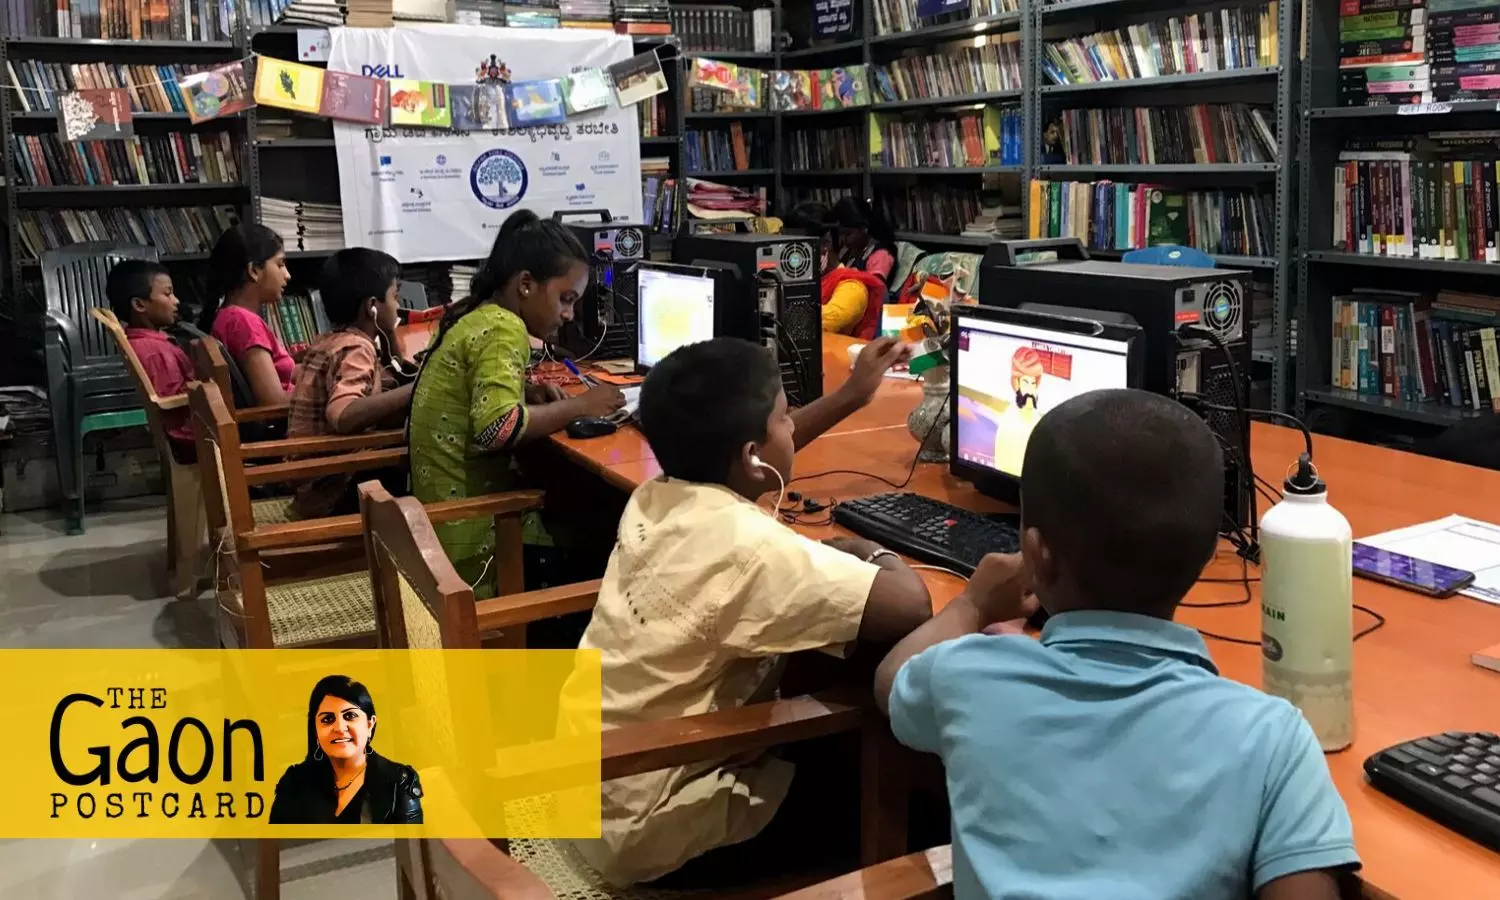 A million dreams are taking shape in Karnataka’s rural libraries